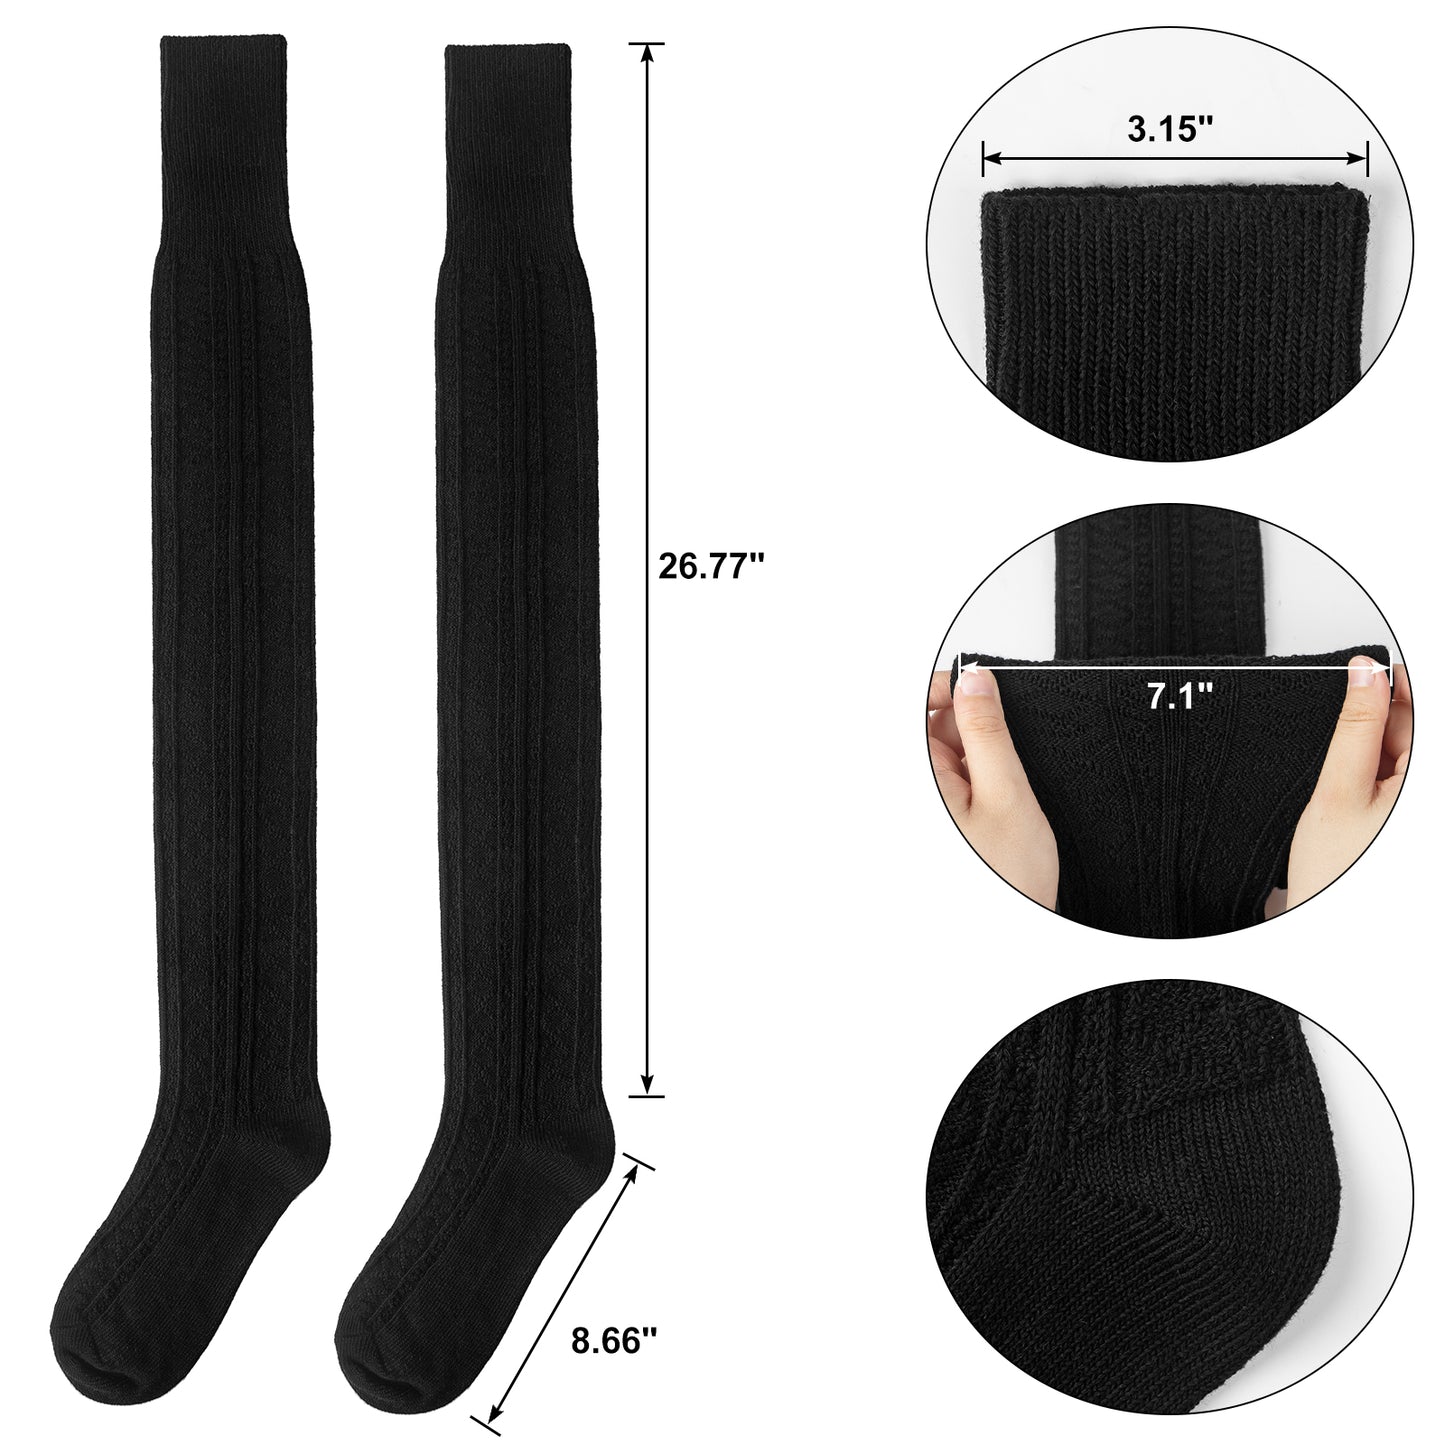 Loritta 2 Pairs Women Thigh High Socks Extra Long Cotton Knit Warm Thick Tall Long Boot Stockings Leg Warmers